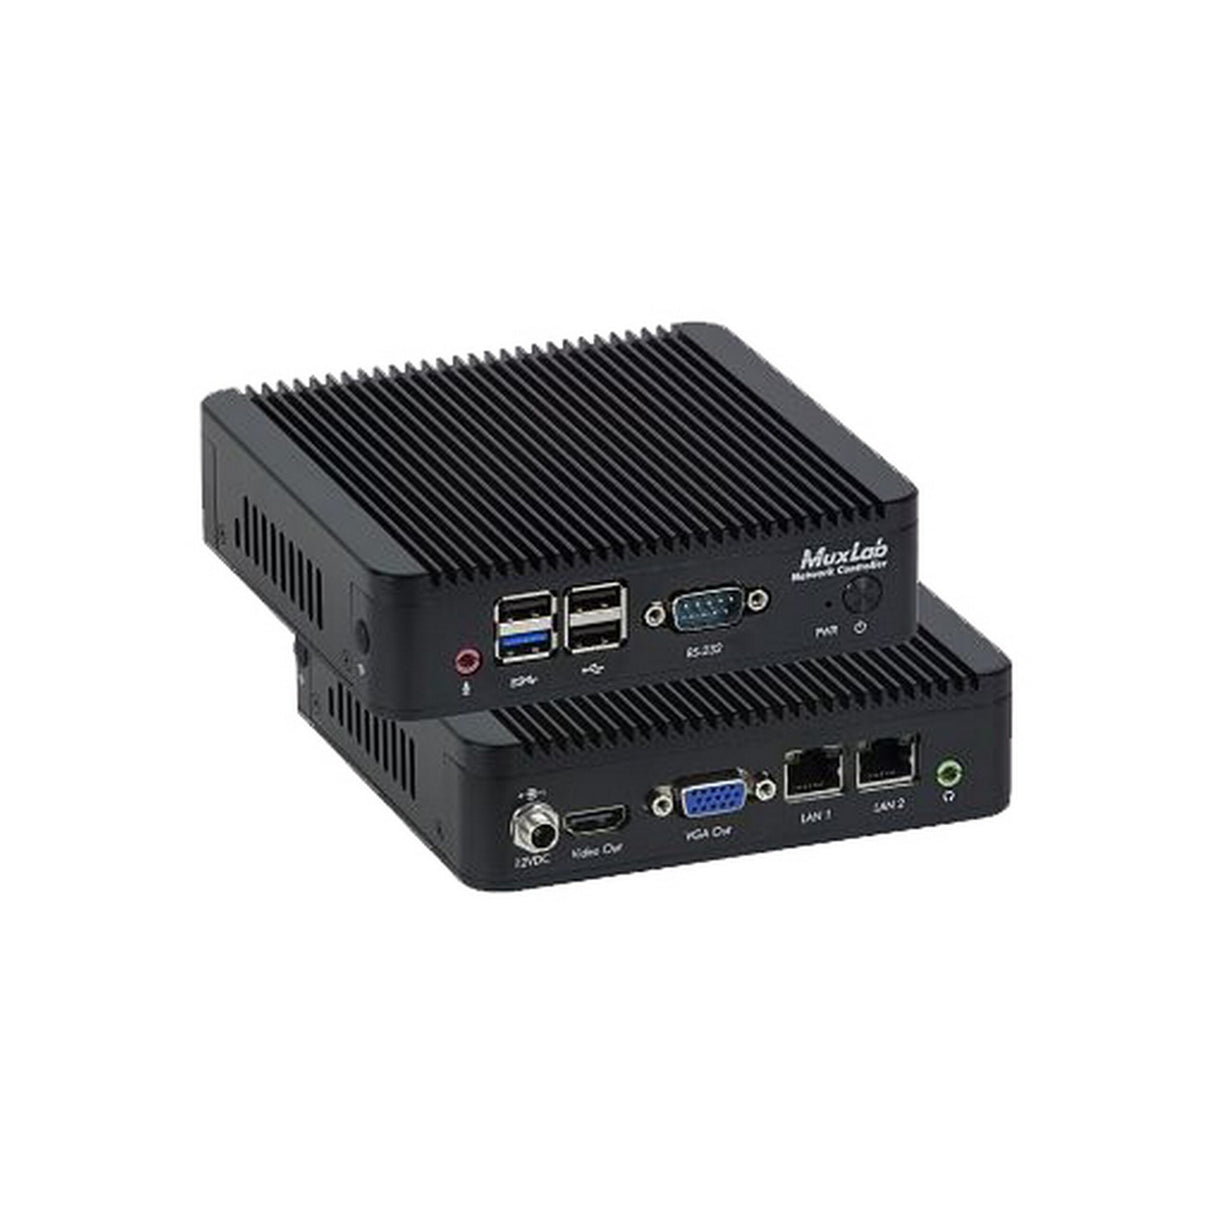 MuxLab 500812 Pro Digital Network Controller